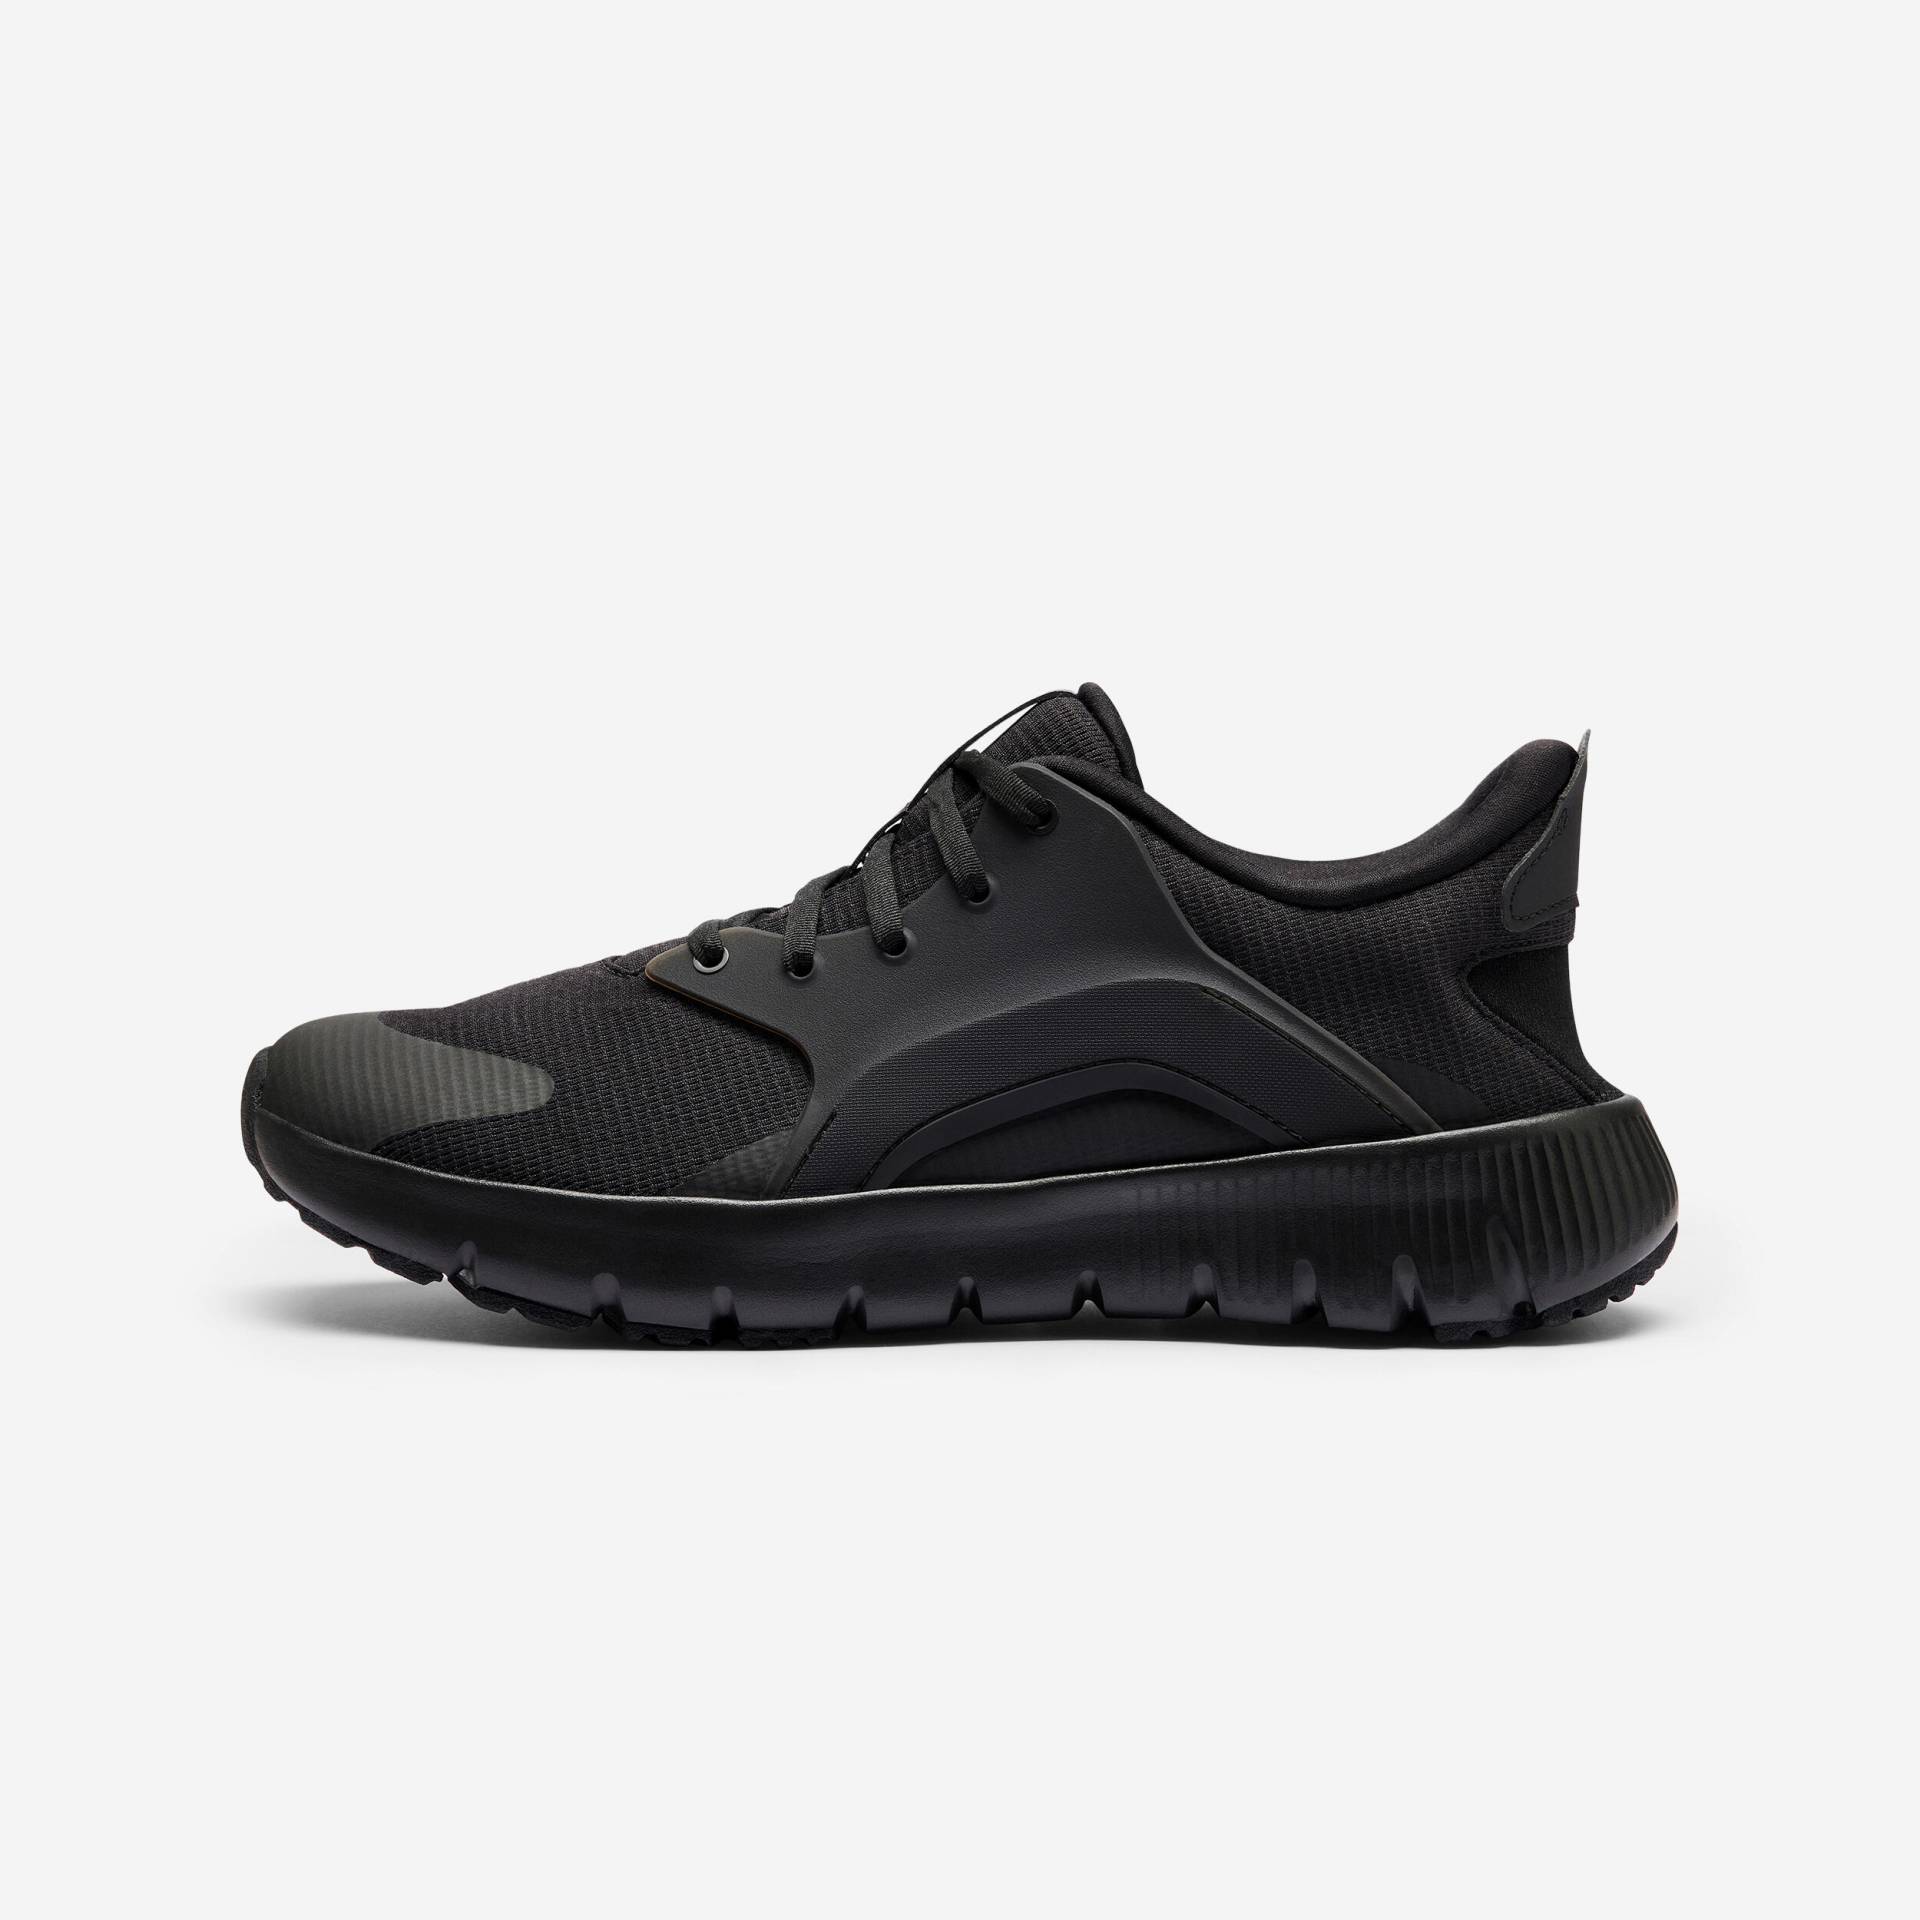 Walking Schuhe Sneaker Herren Standard - SW500.1 schwarz von Kalenji